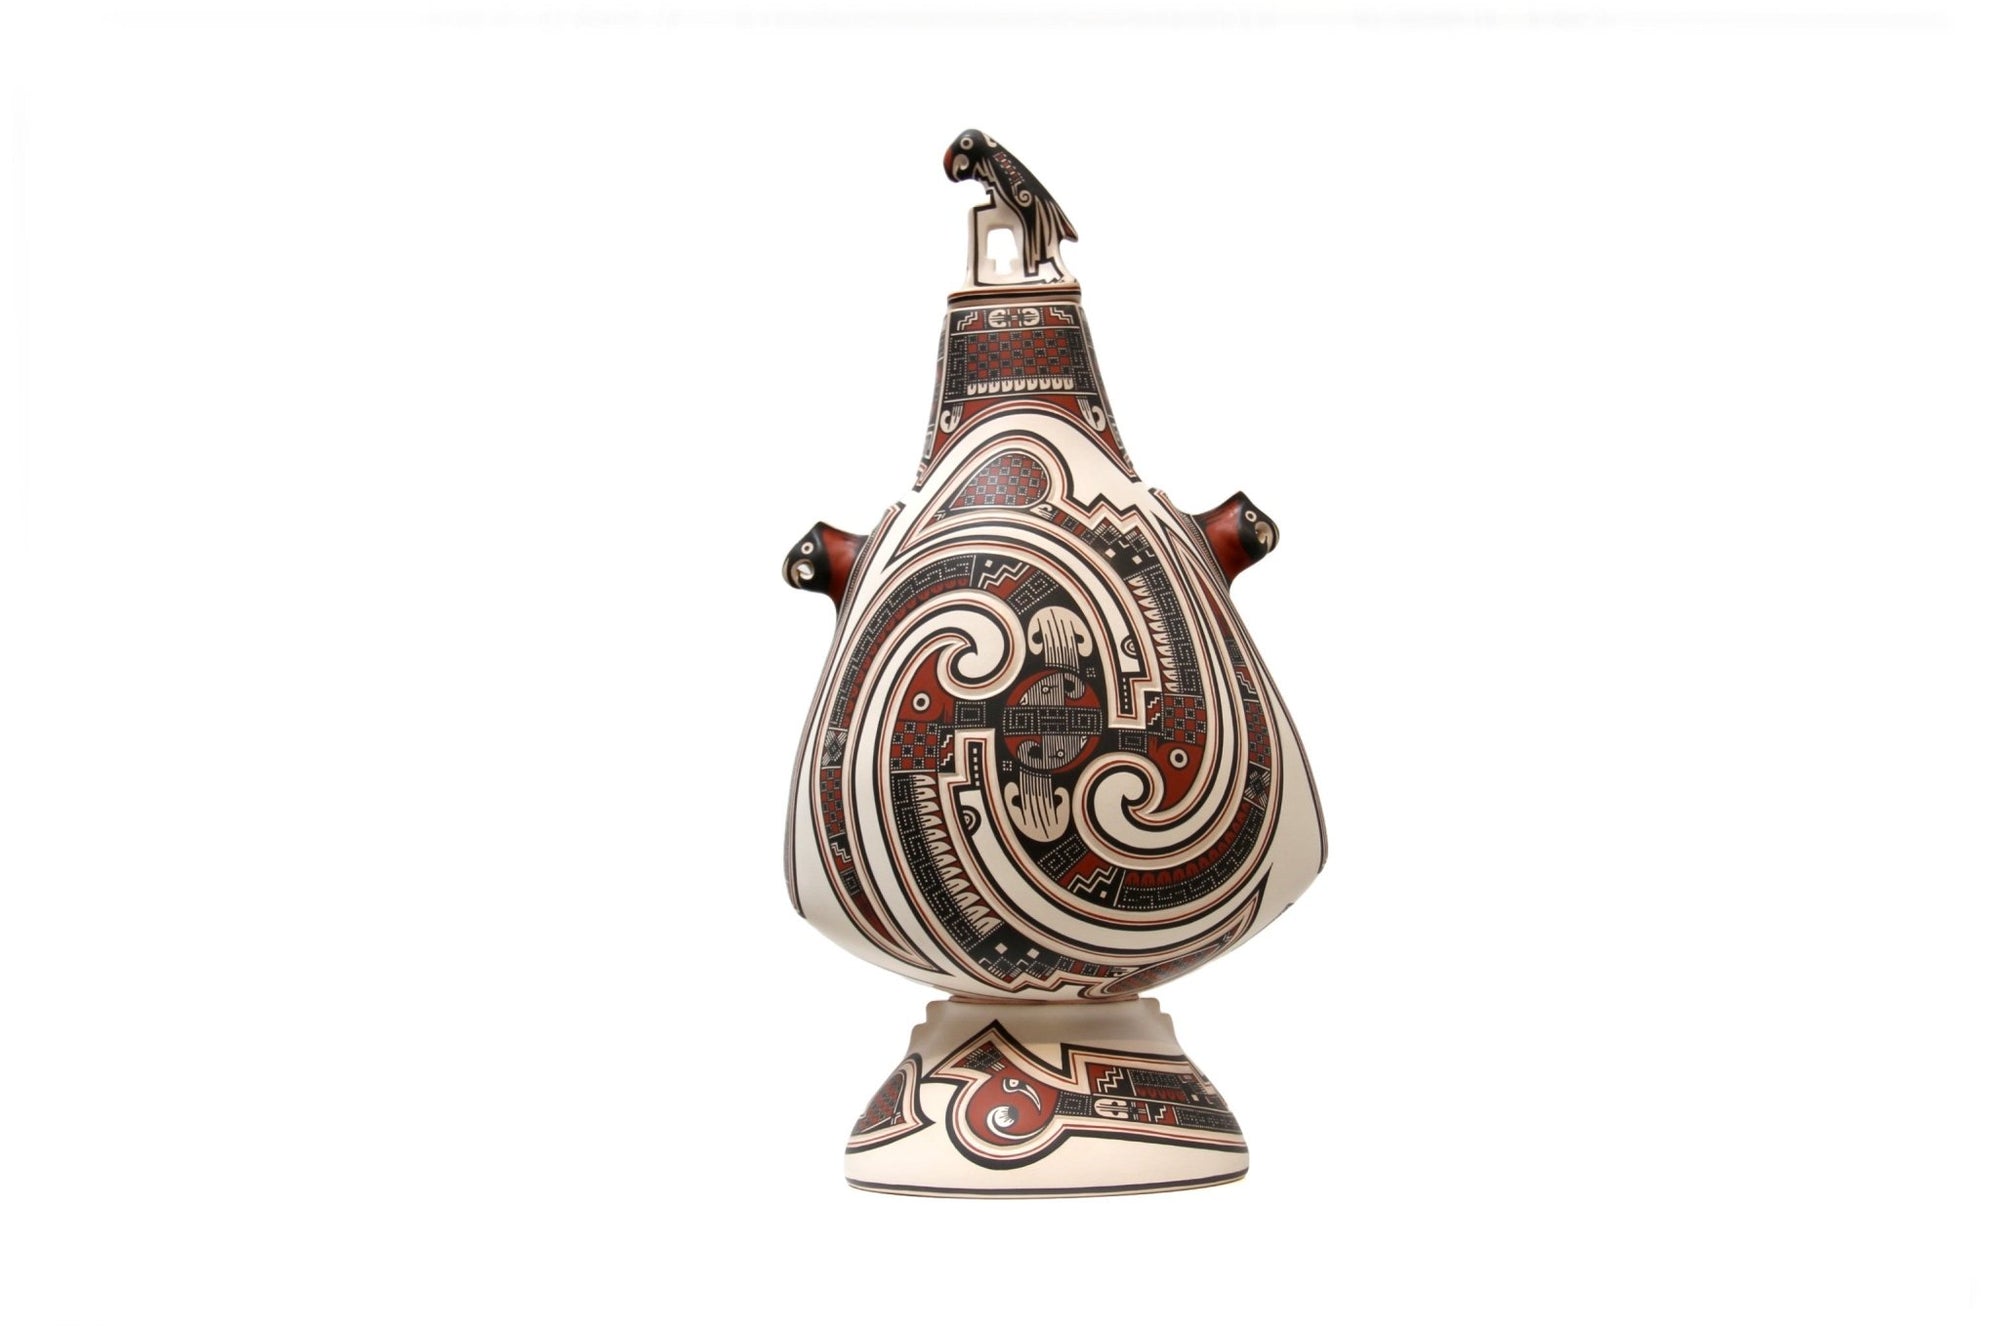 Mata Ortiz Keramik – Nordadler – Huichol-Kunst – Marakame